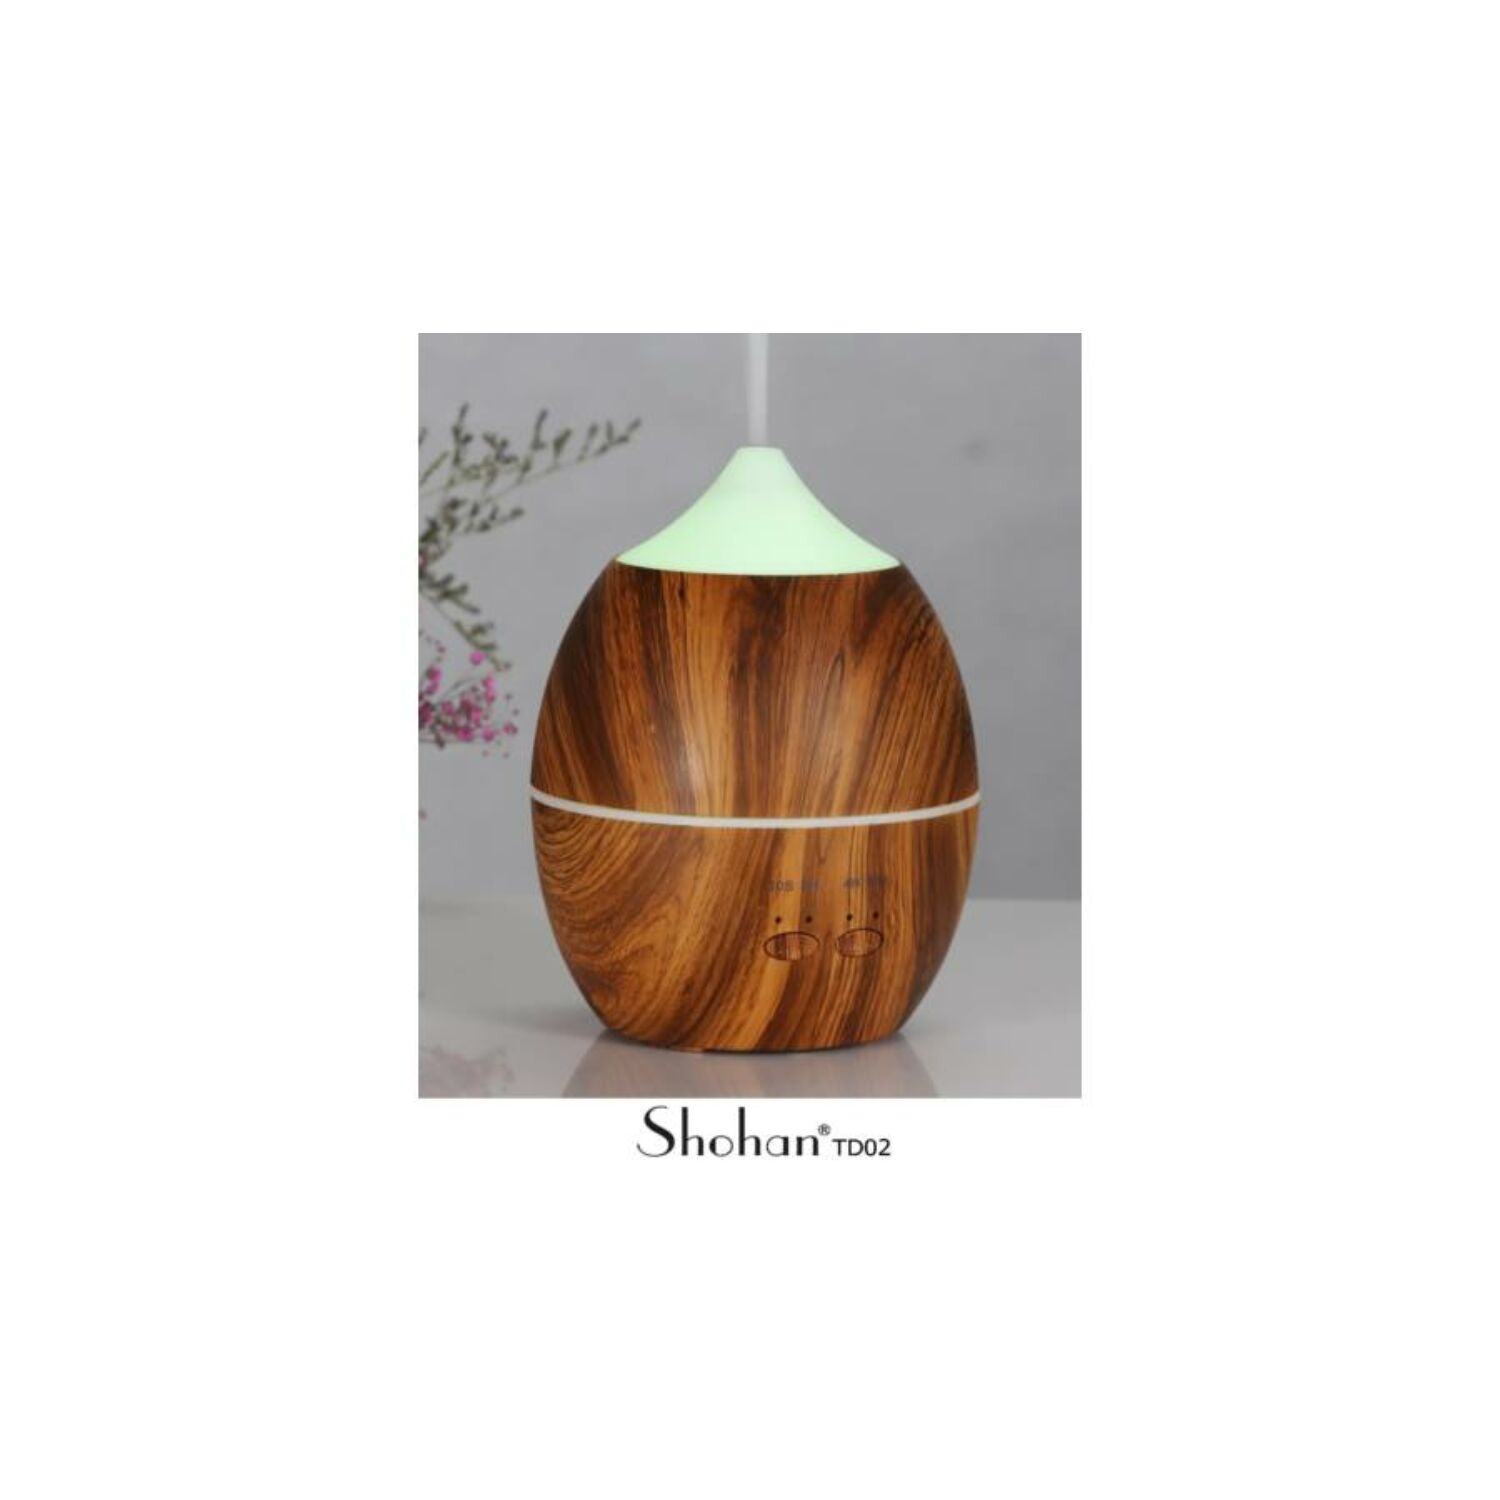 Shohan TD 02 ultrahangos aroma diffúzor, sötét fa színű